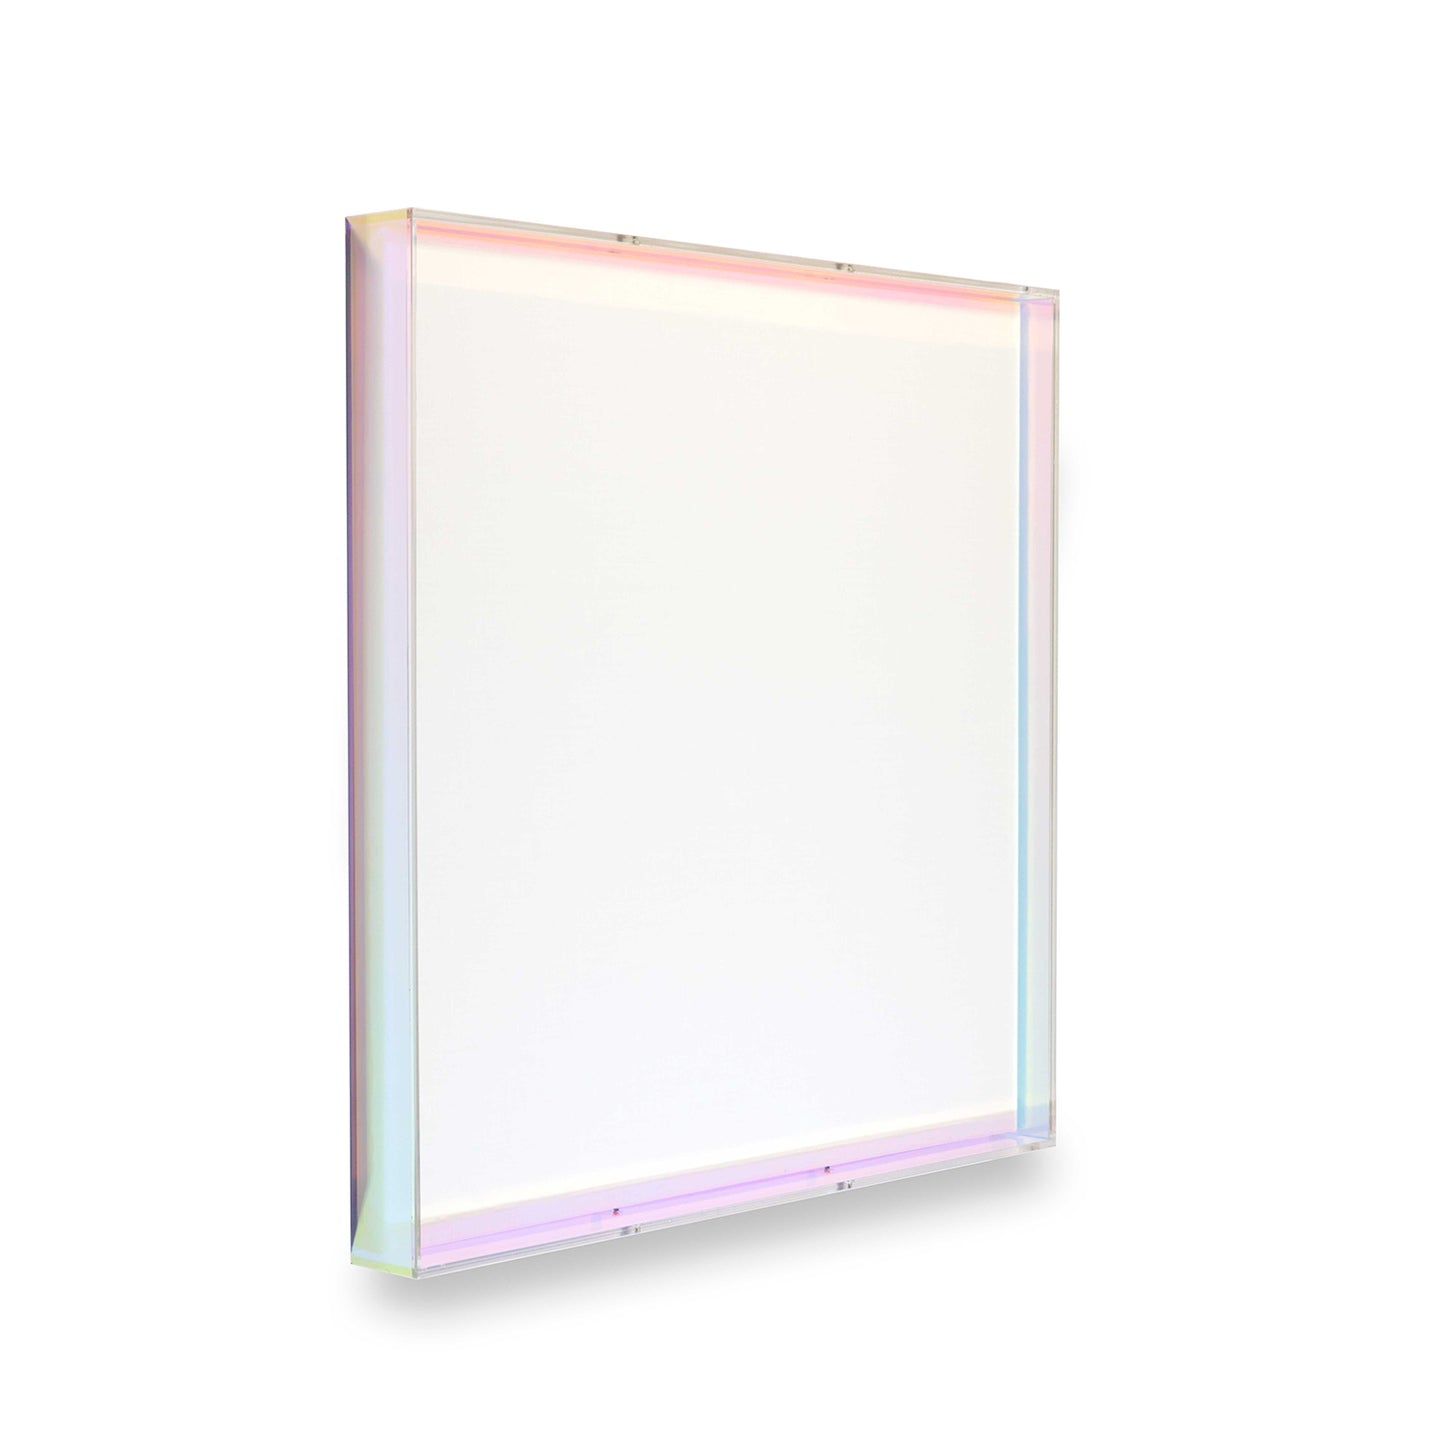 Rainbow Acrylic Shadowbox with White Canvas